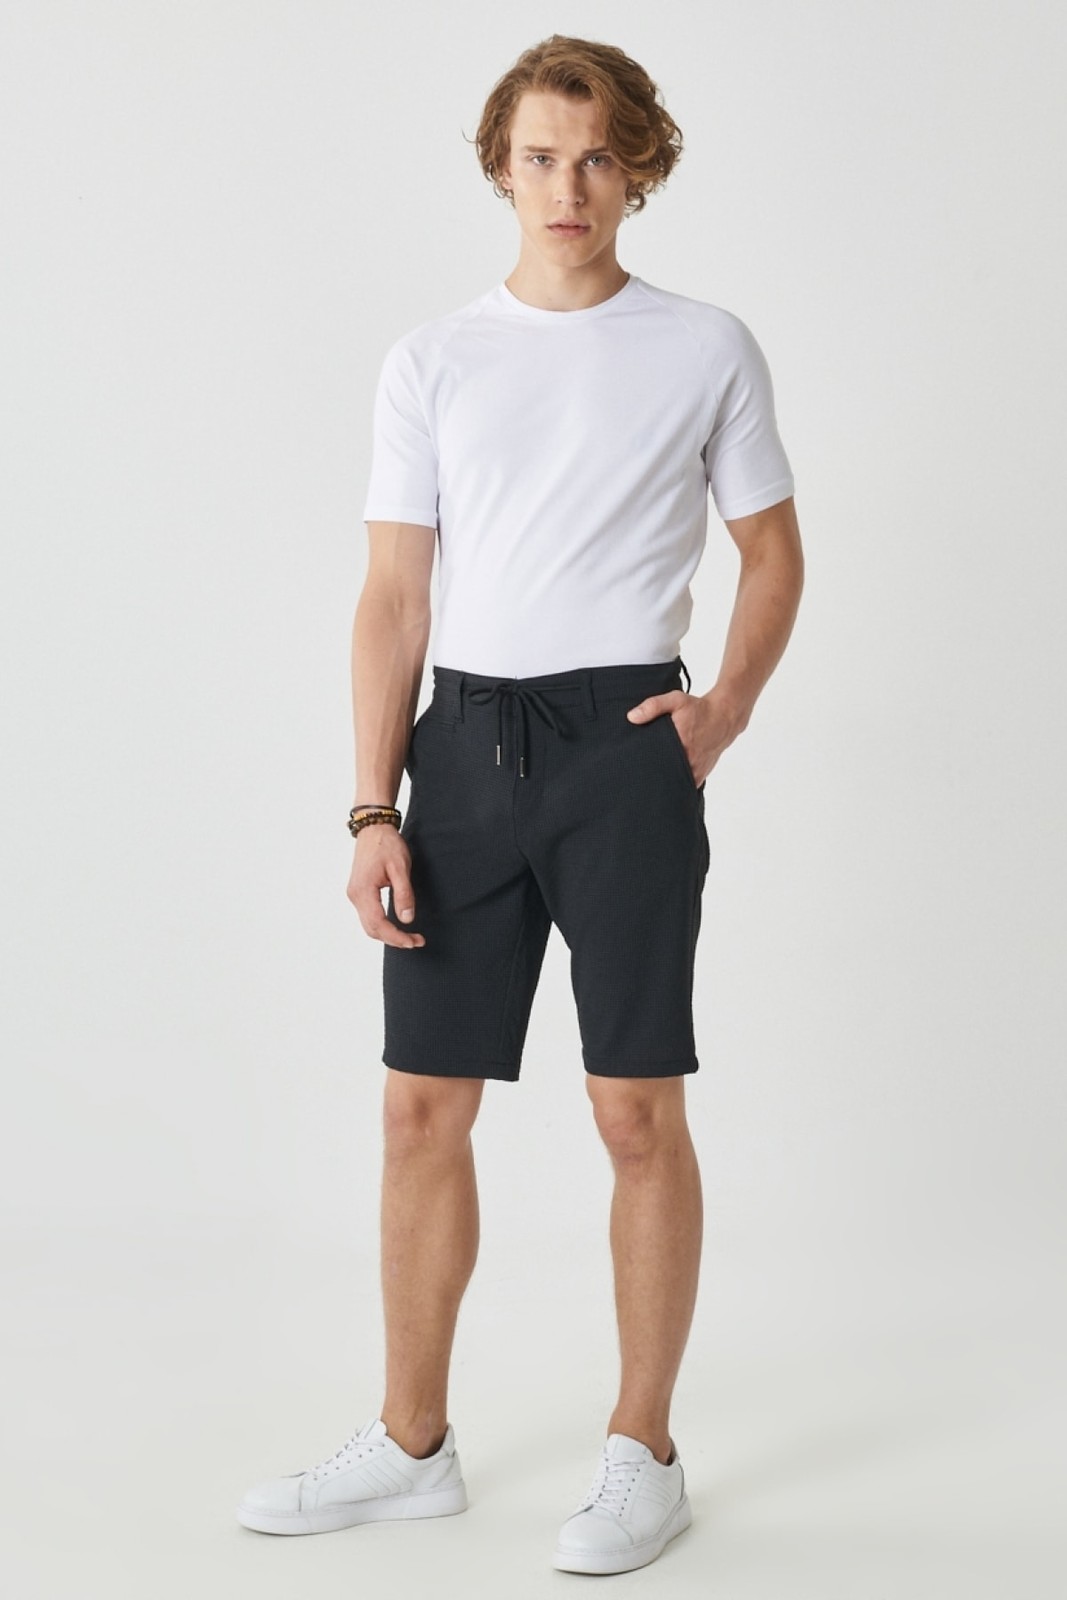 ALTINYILDIZ CLASSICS Men's Anthracite Slim Fit Narrow Cut Flexible Shorts with Tie Waist